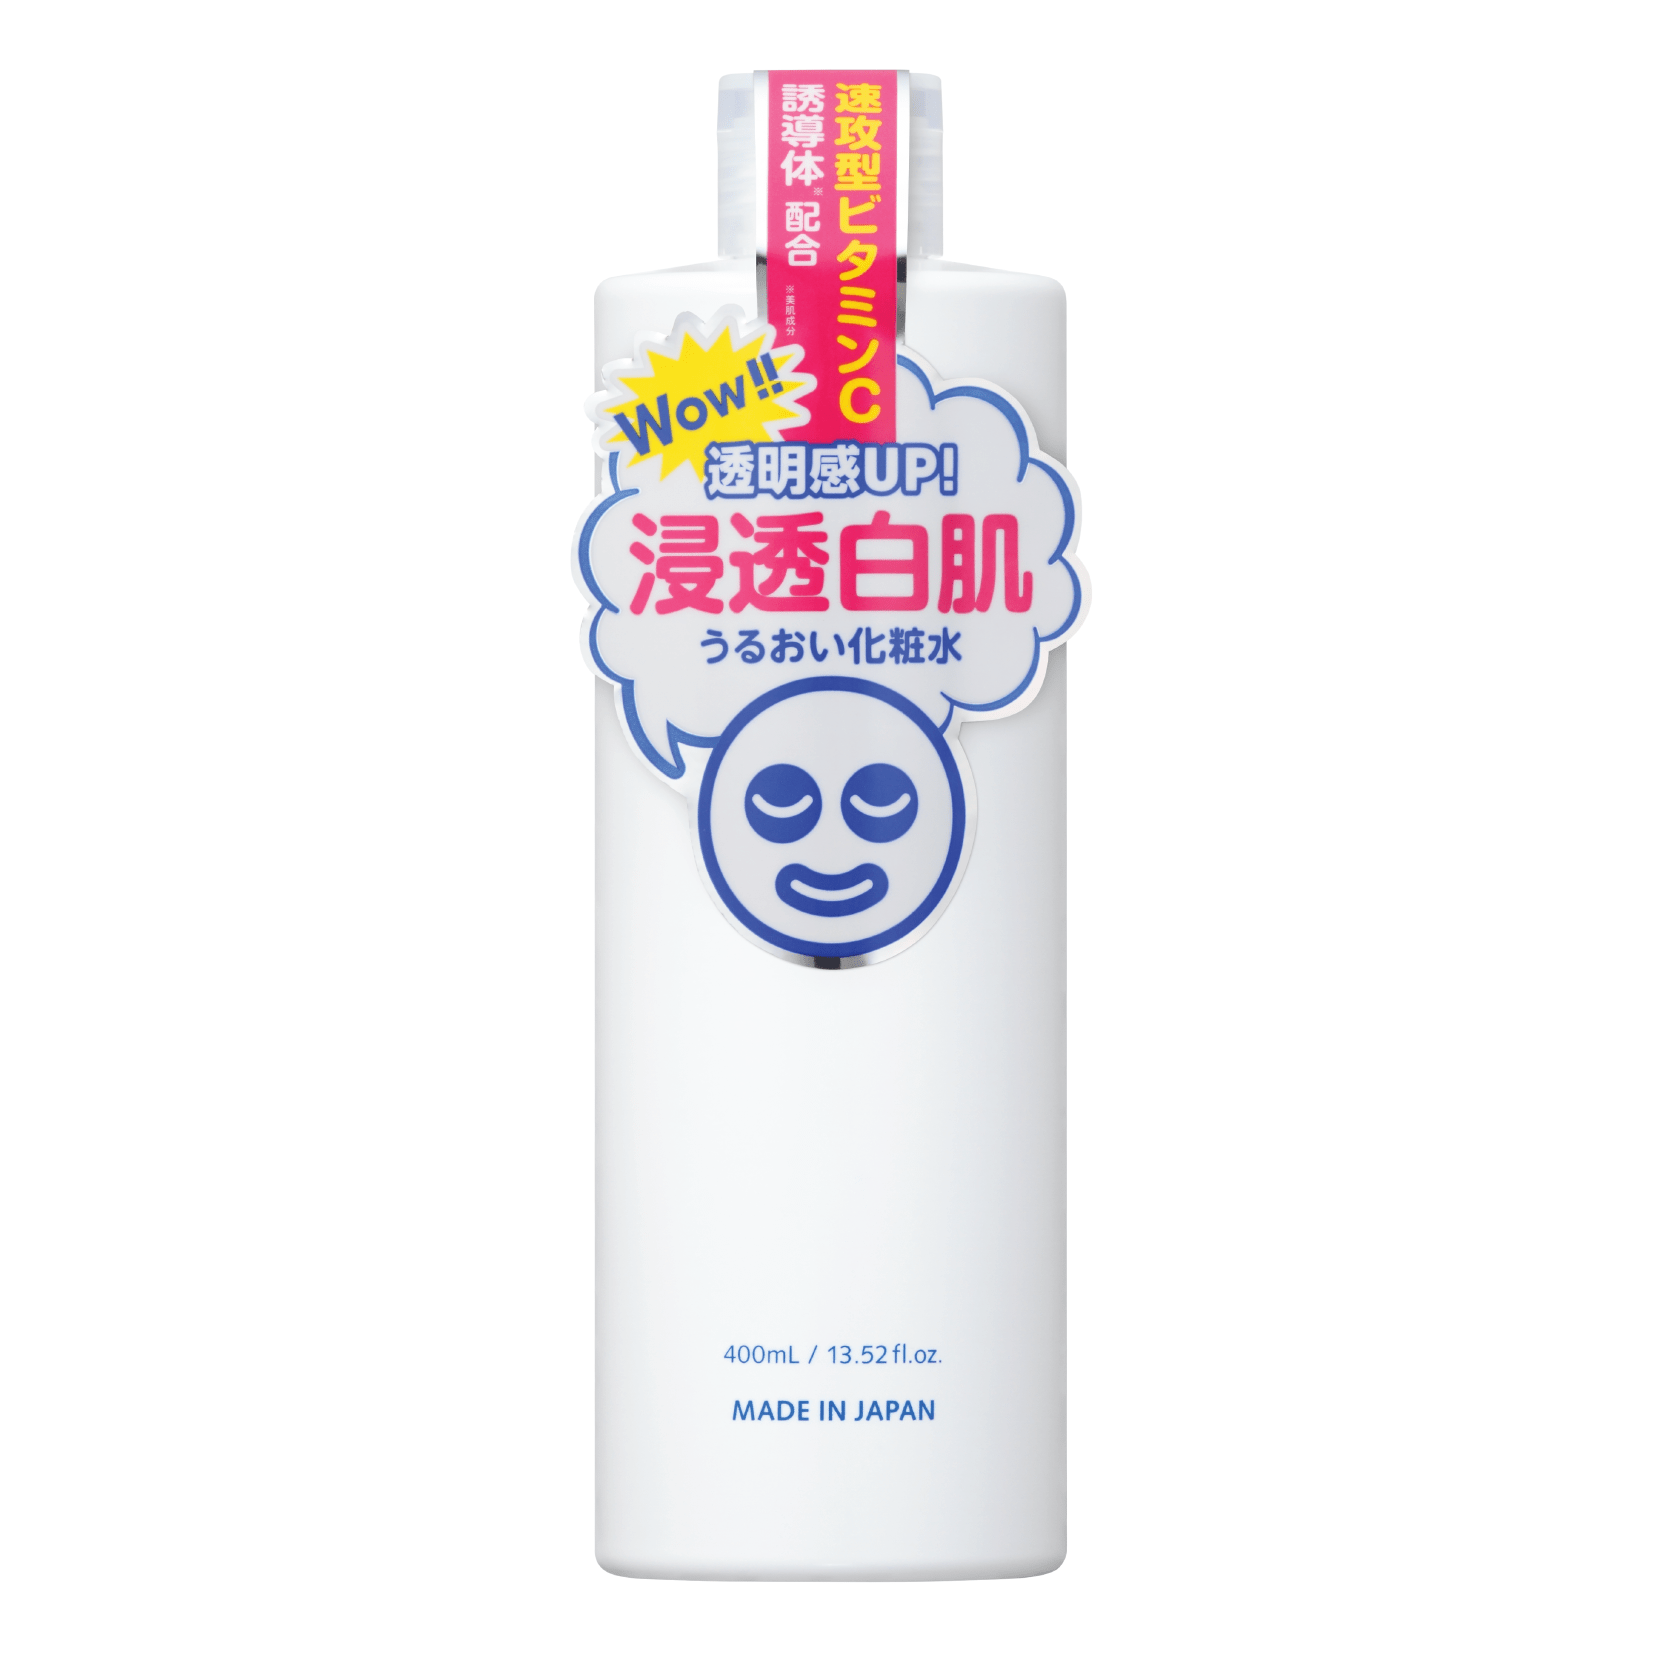 TOUMEI SHIROHADA Transparent White Lotion 400ML (Face Toner)